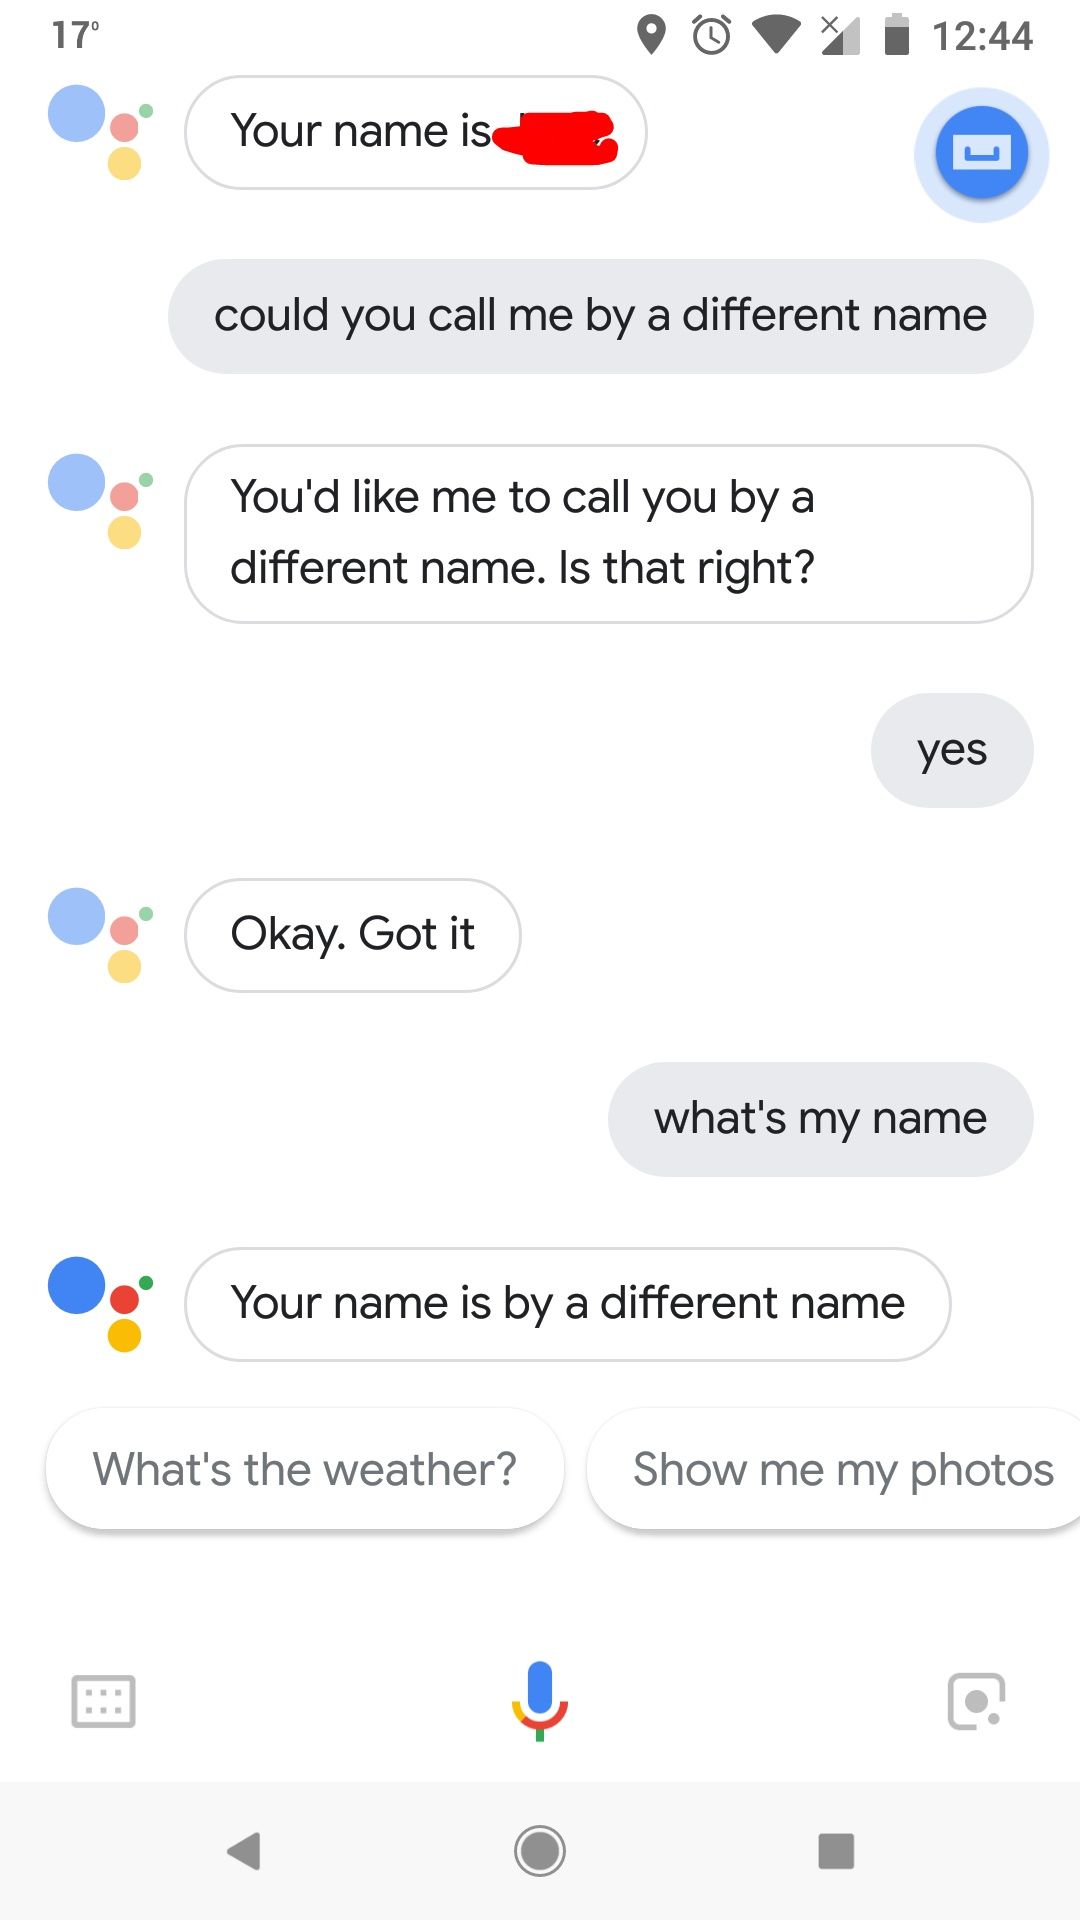 Google Assistant makes a dad joke